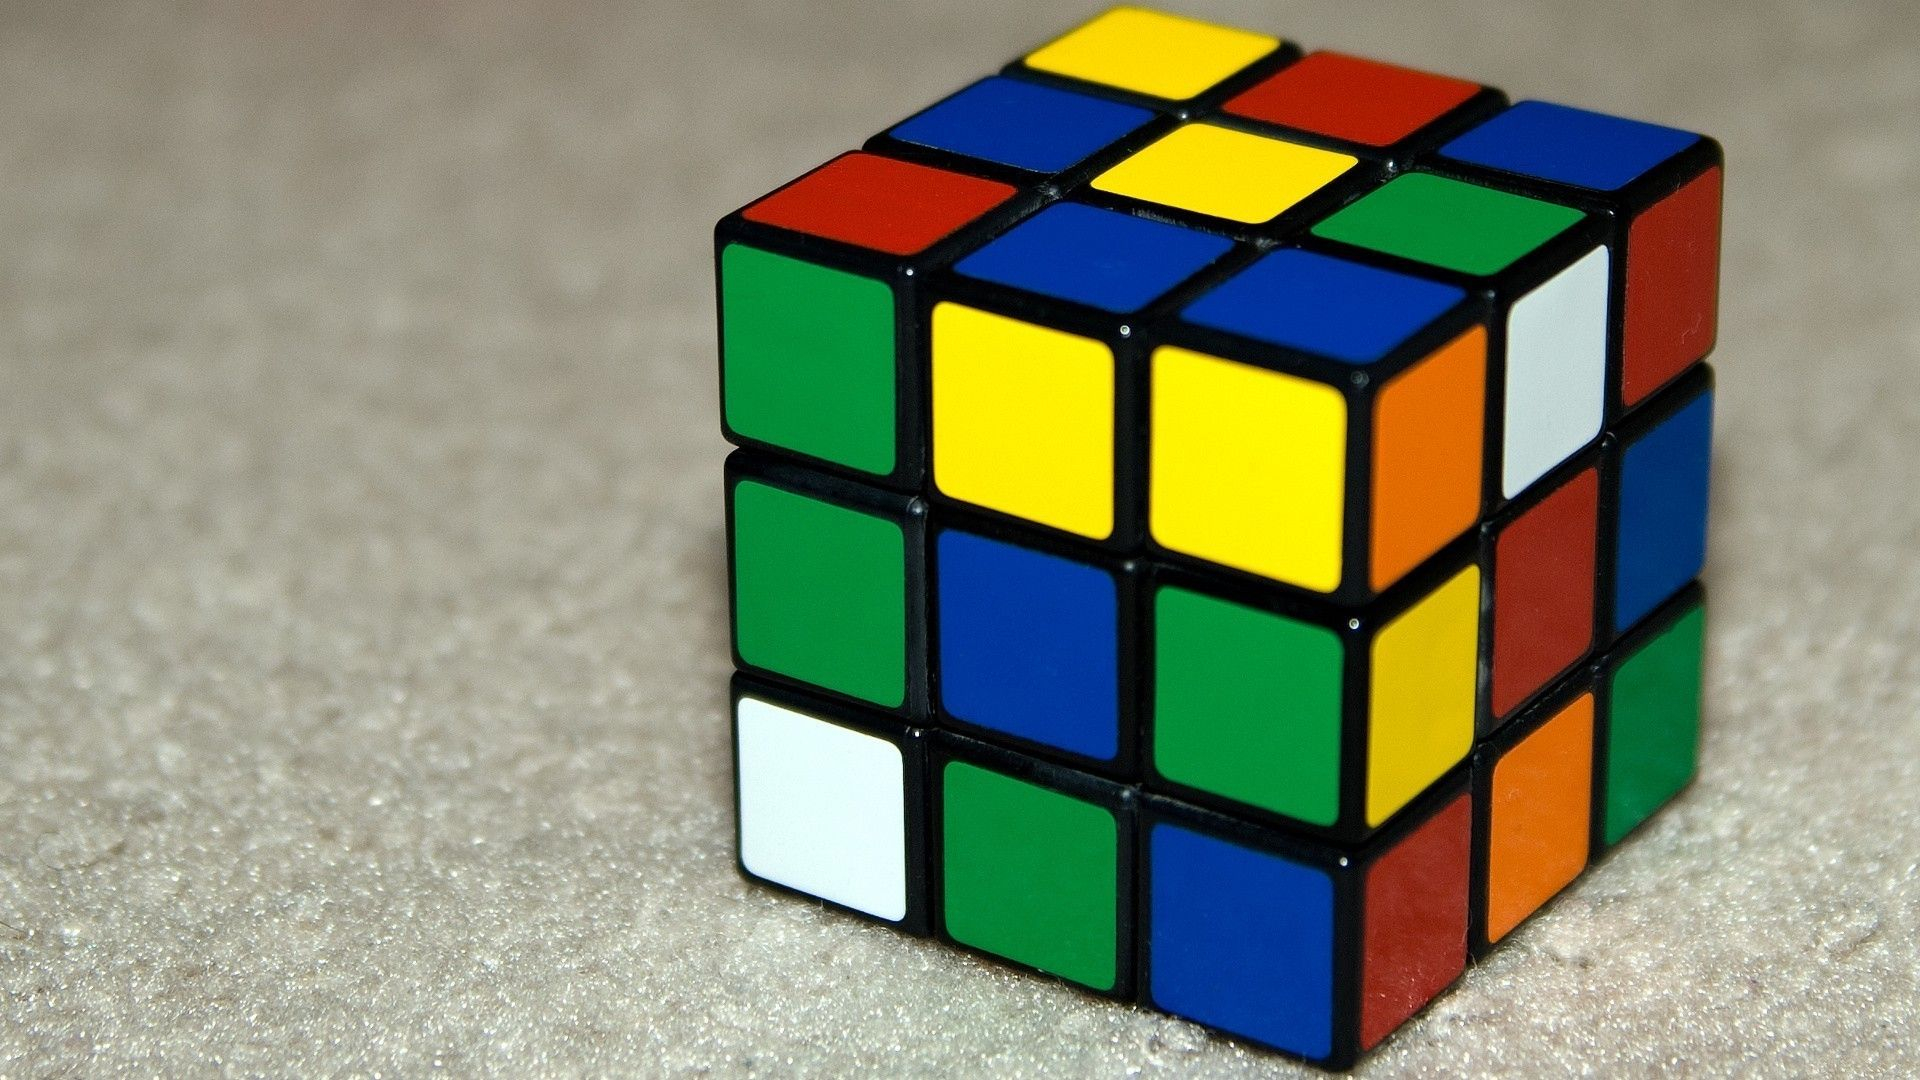 1920x1080 11 Rubik's Cube HD Wallpapers | Backgrounds | Rubiks cube, Rubix cube, Cube